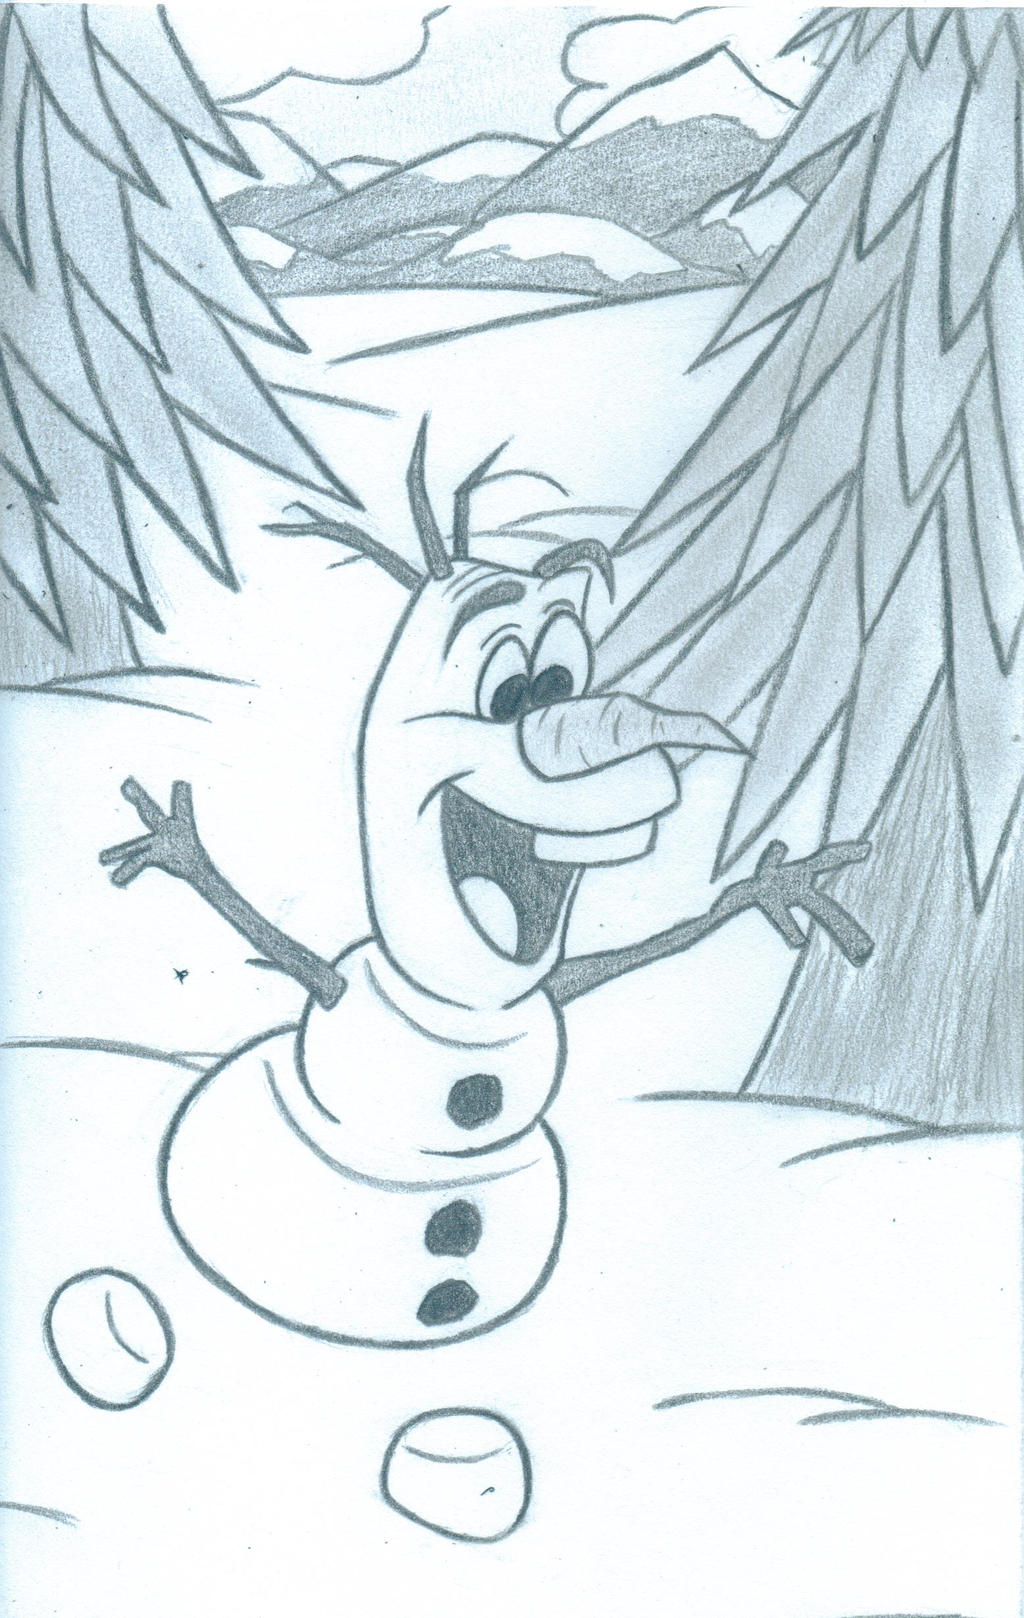 Olaf the Snowman by firegirl1995 on DeviantArt